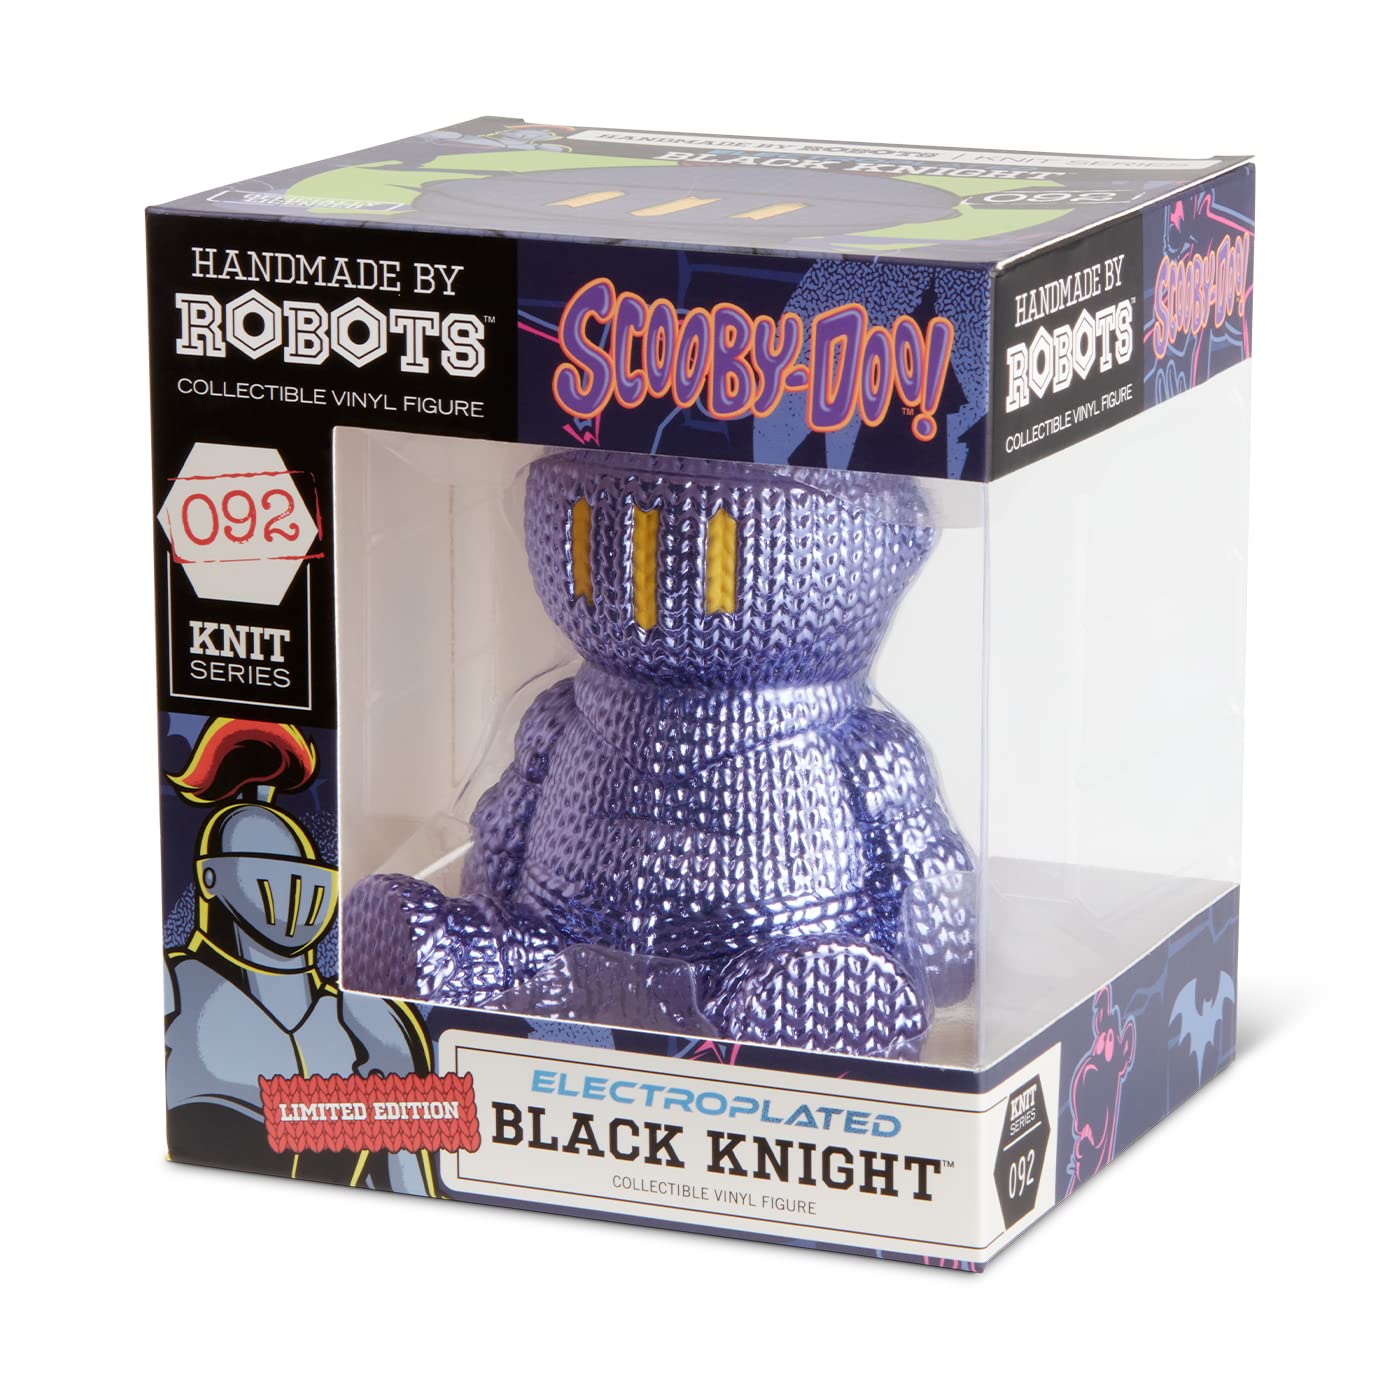 Handmade by Robots Bensussen Deutch - Scooby-Doo - Black Knight Electroplated HMBR Vinyl Figure (Net)